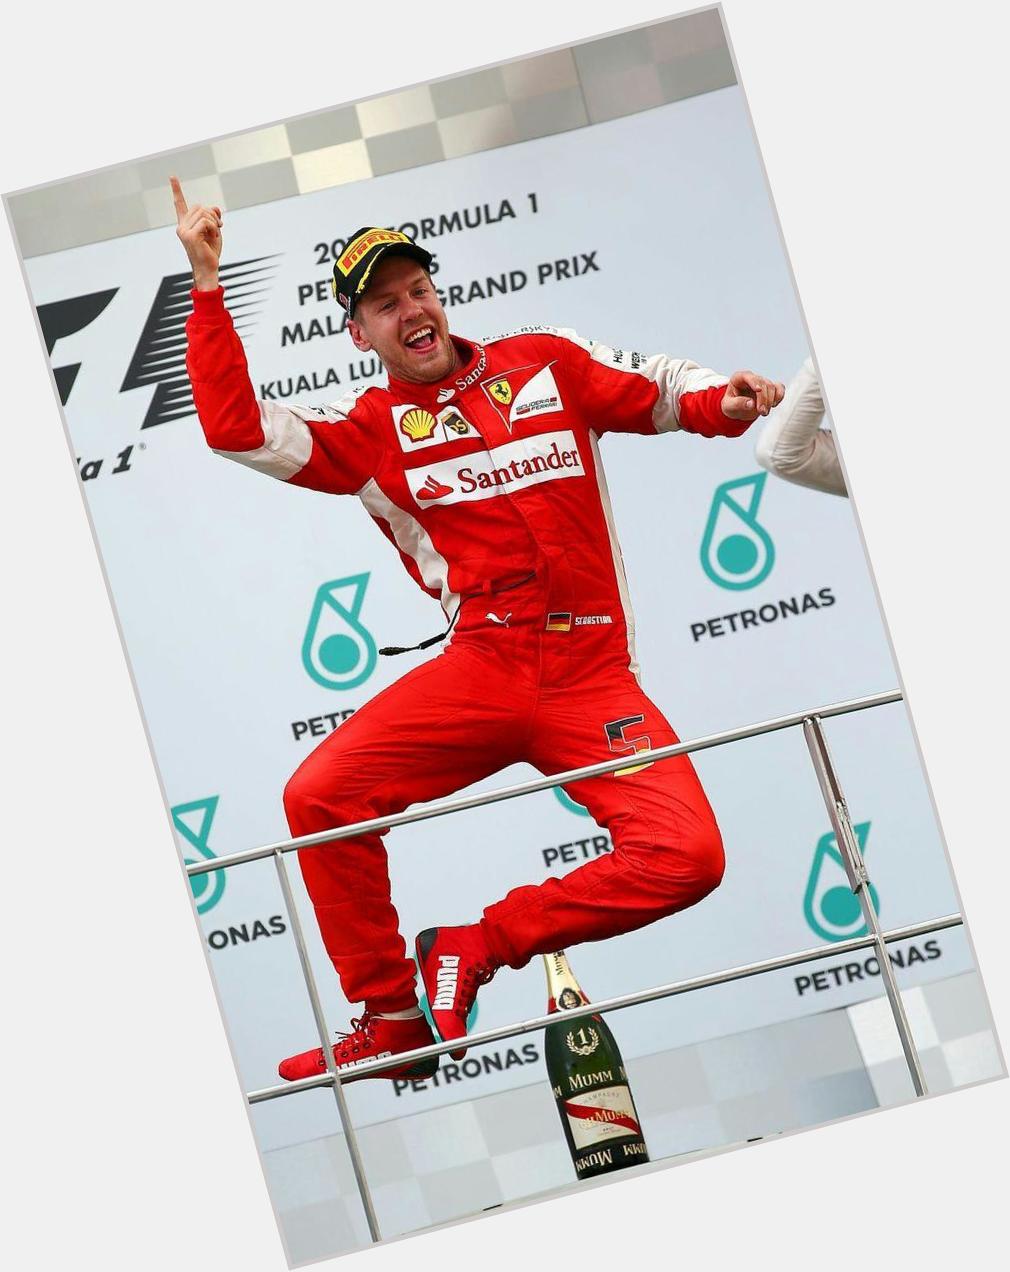 Wishing 4 times World Champion Sebastian Vettel a very happy 28th Birthday! 